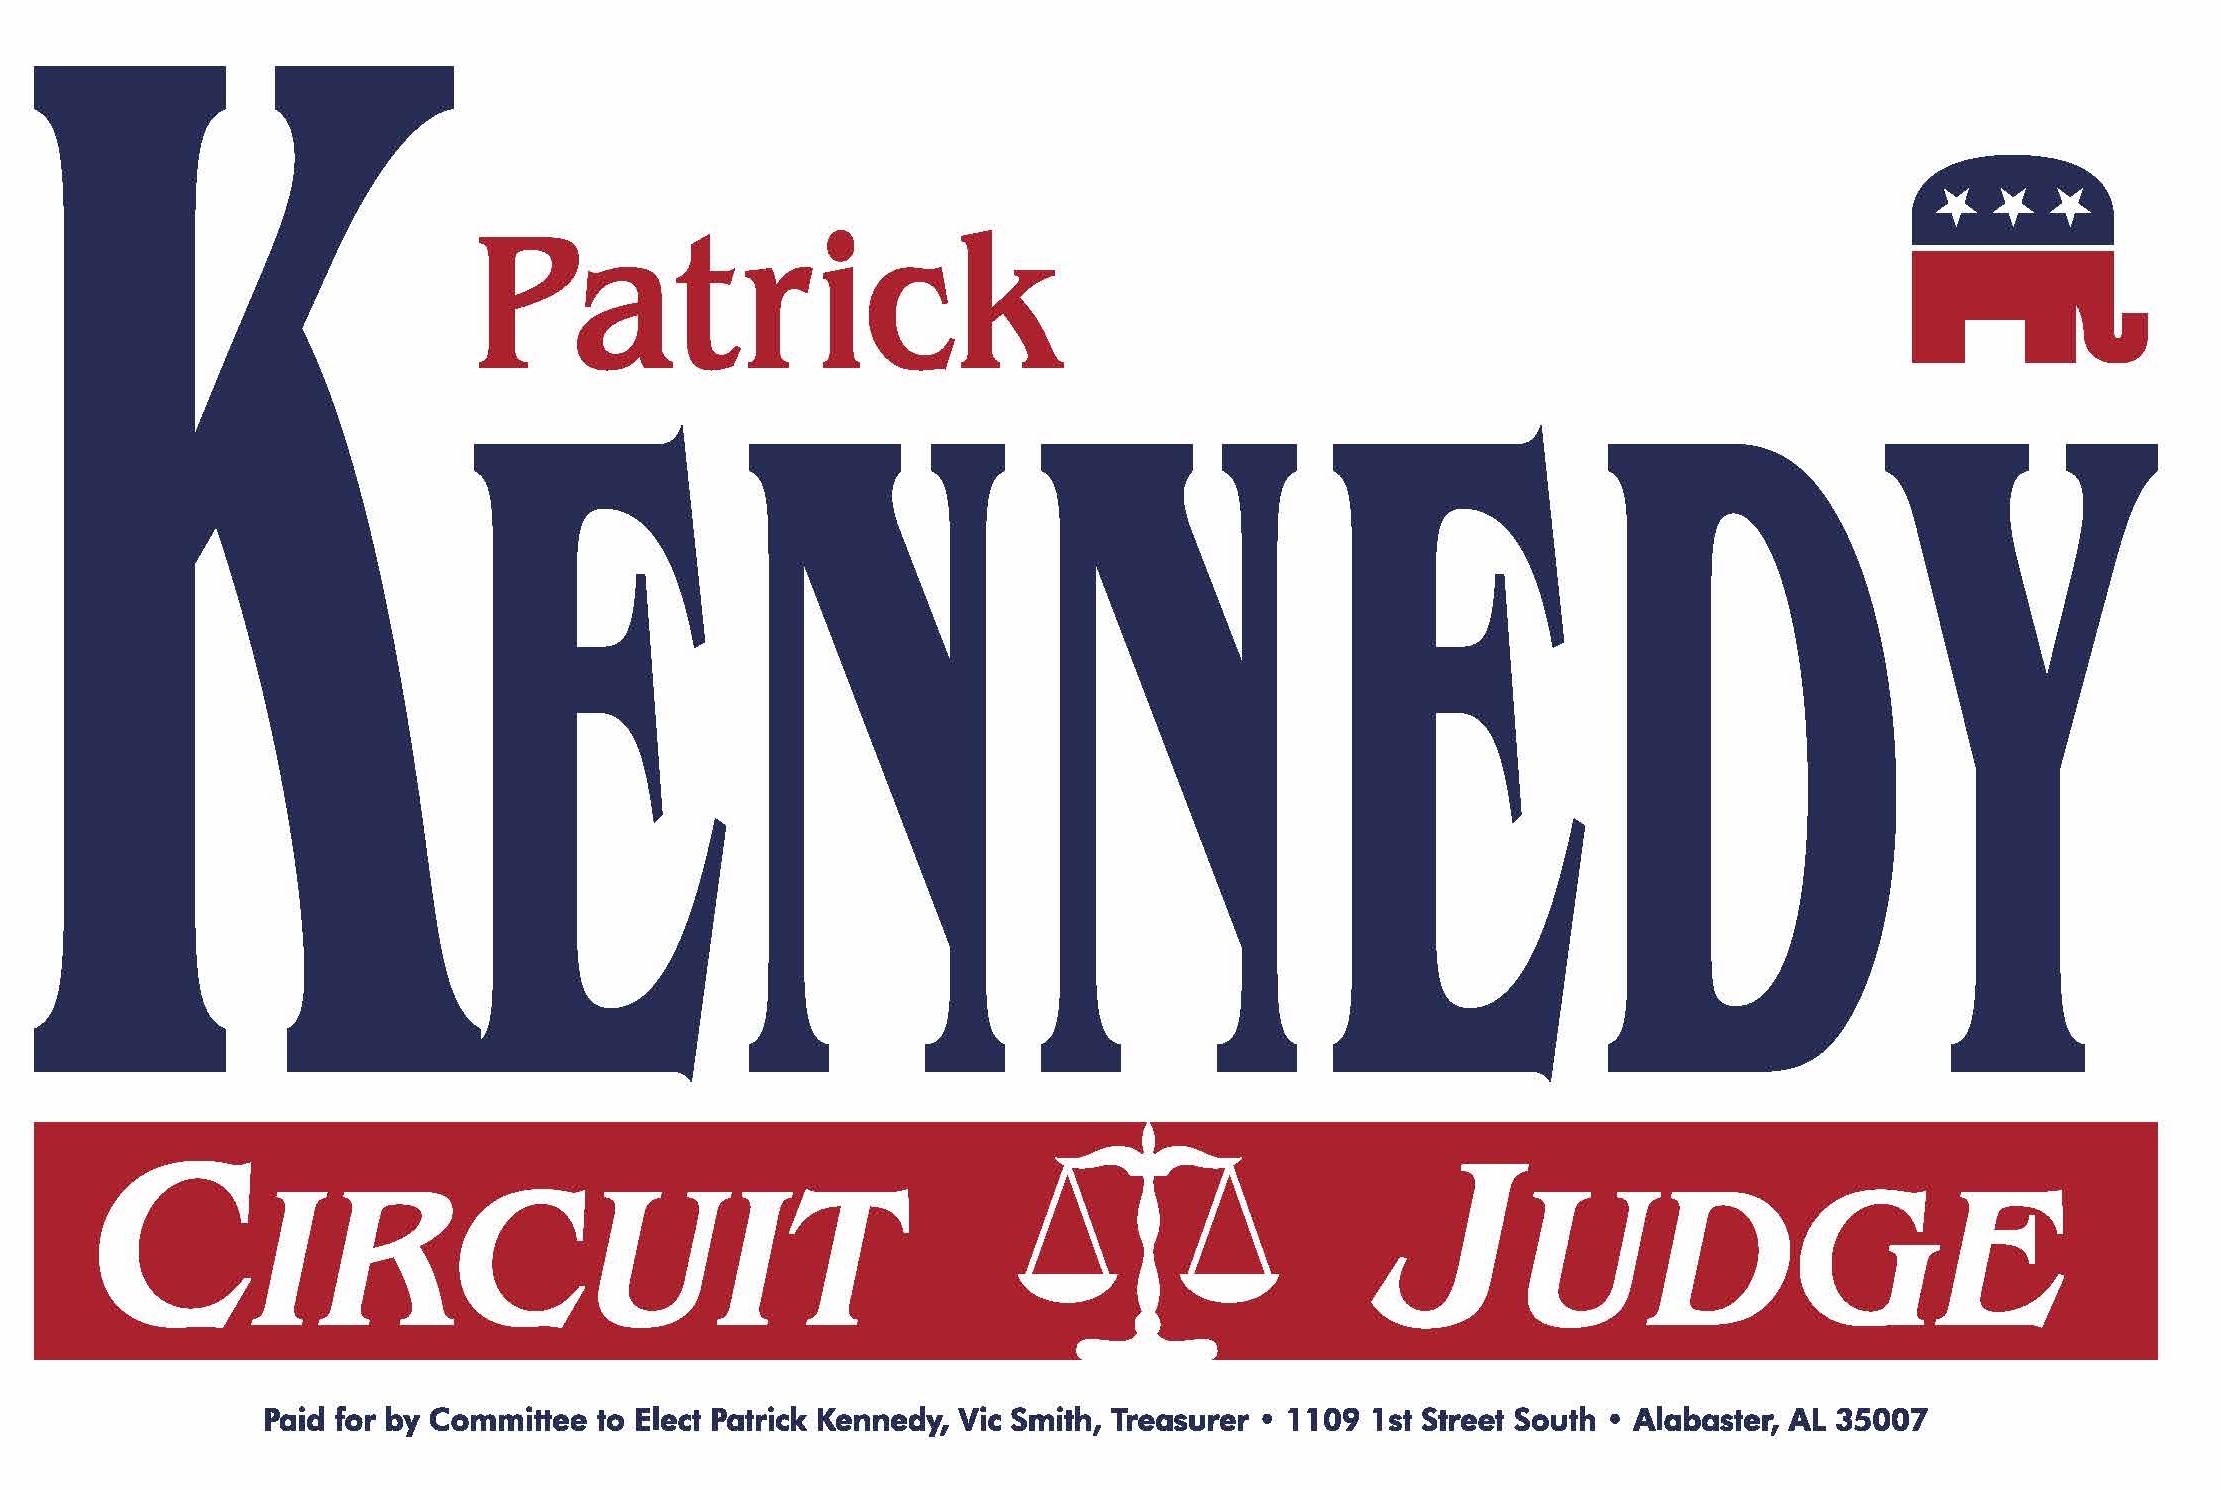 Patrick Kennedy – Circuit Judge